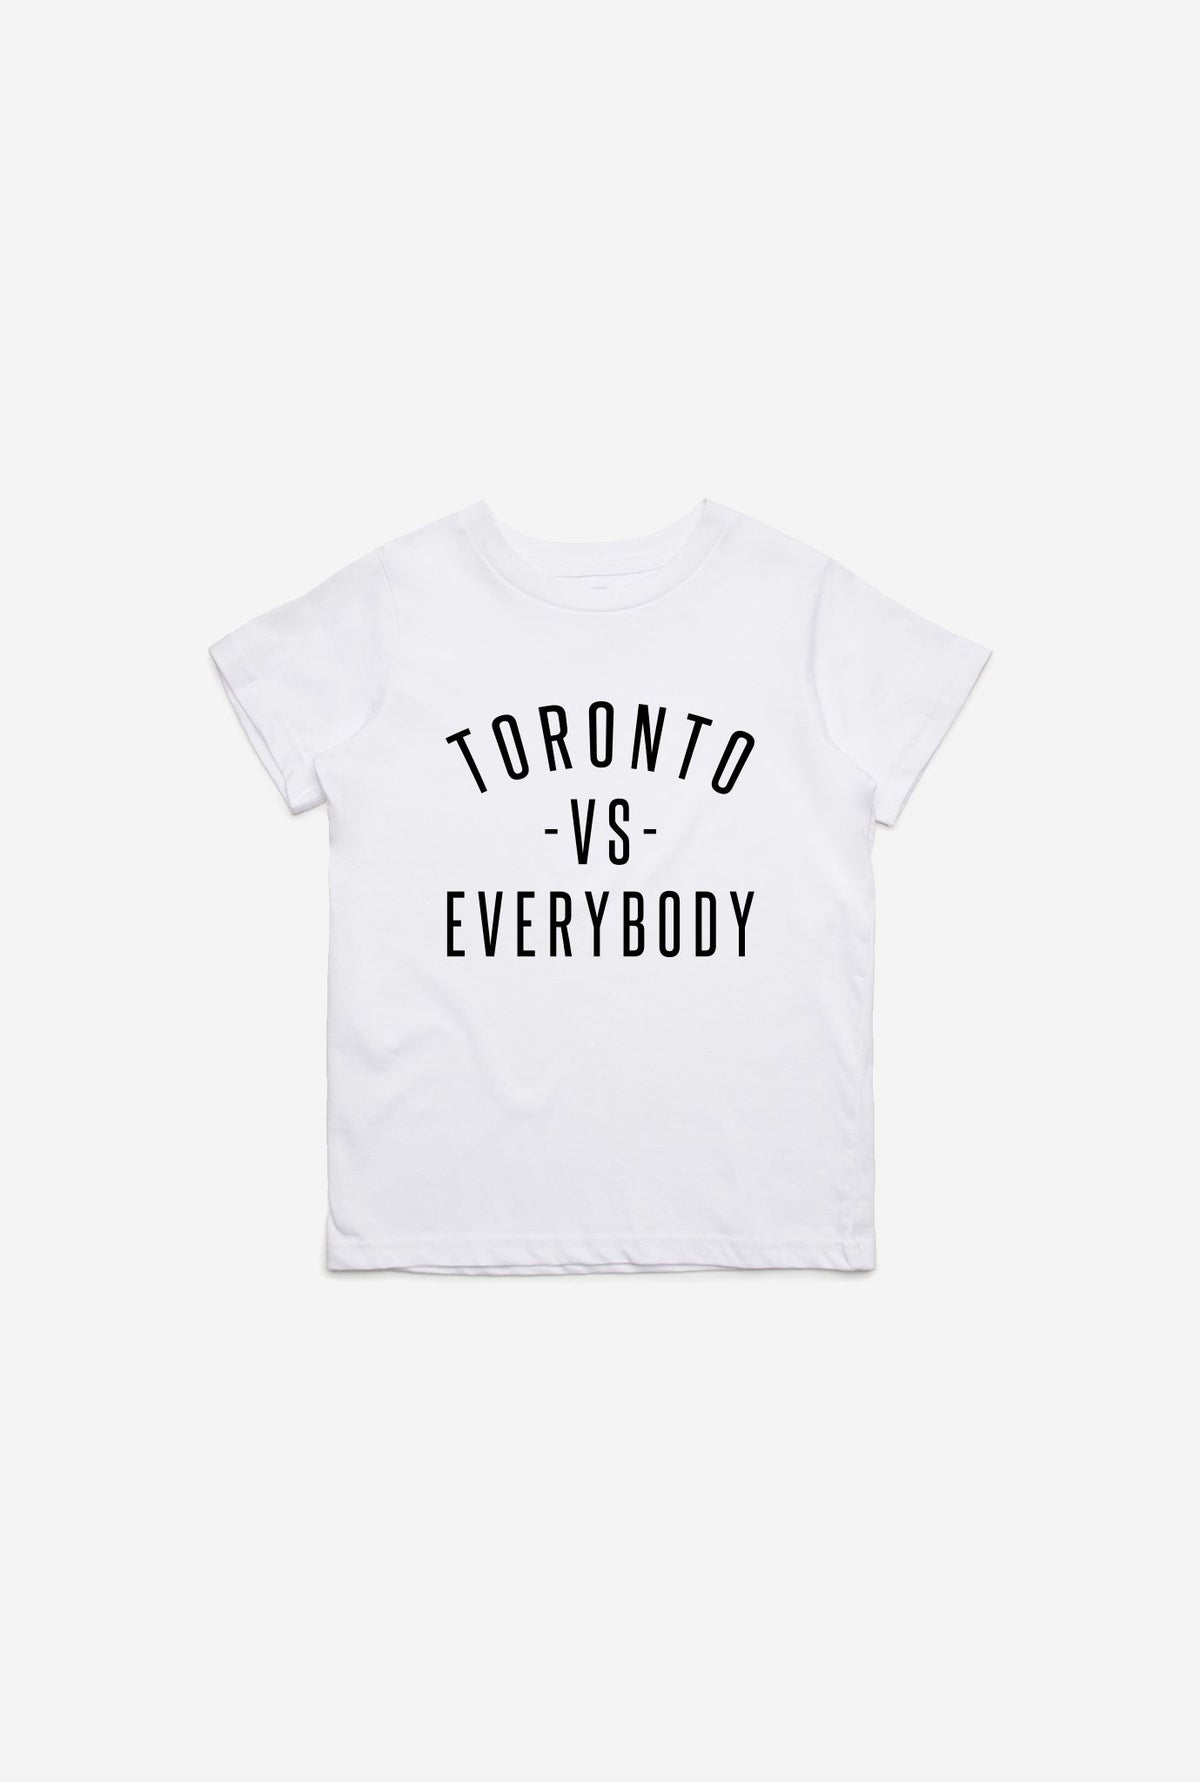 Toronto -vs- Everybody Kids T-Shirt - White